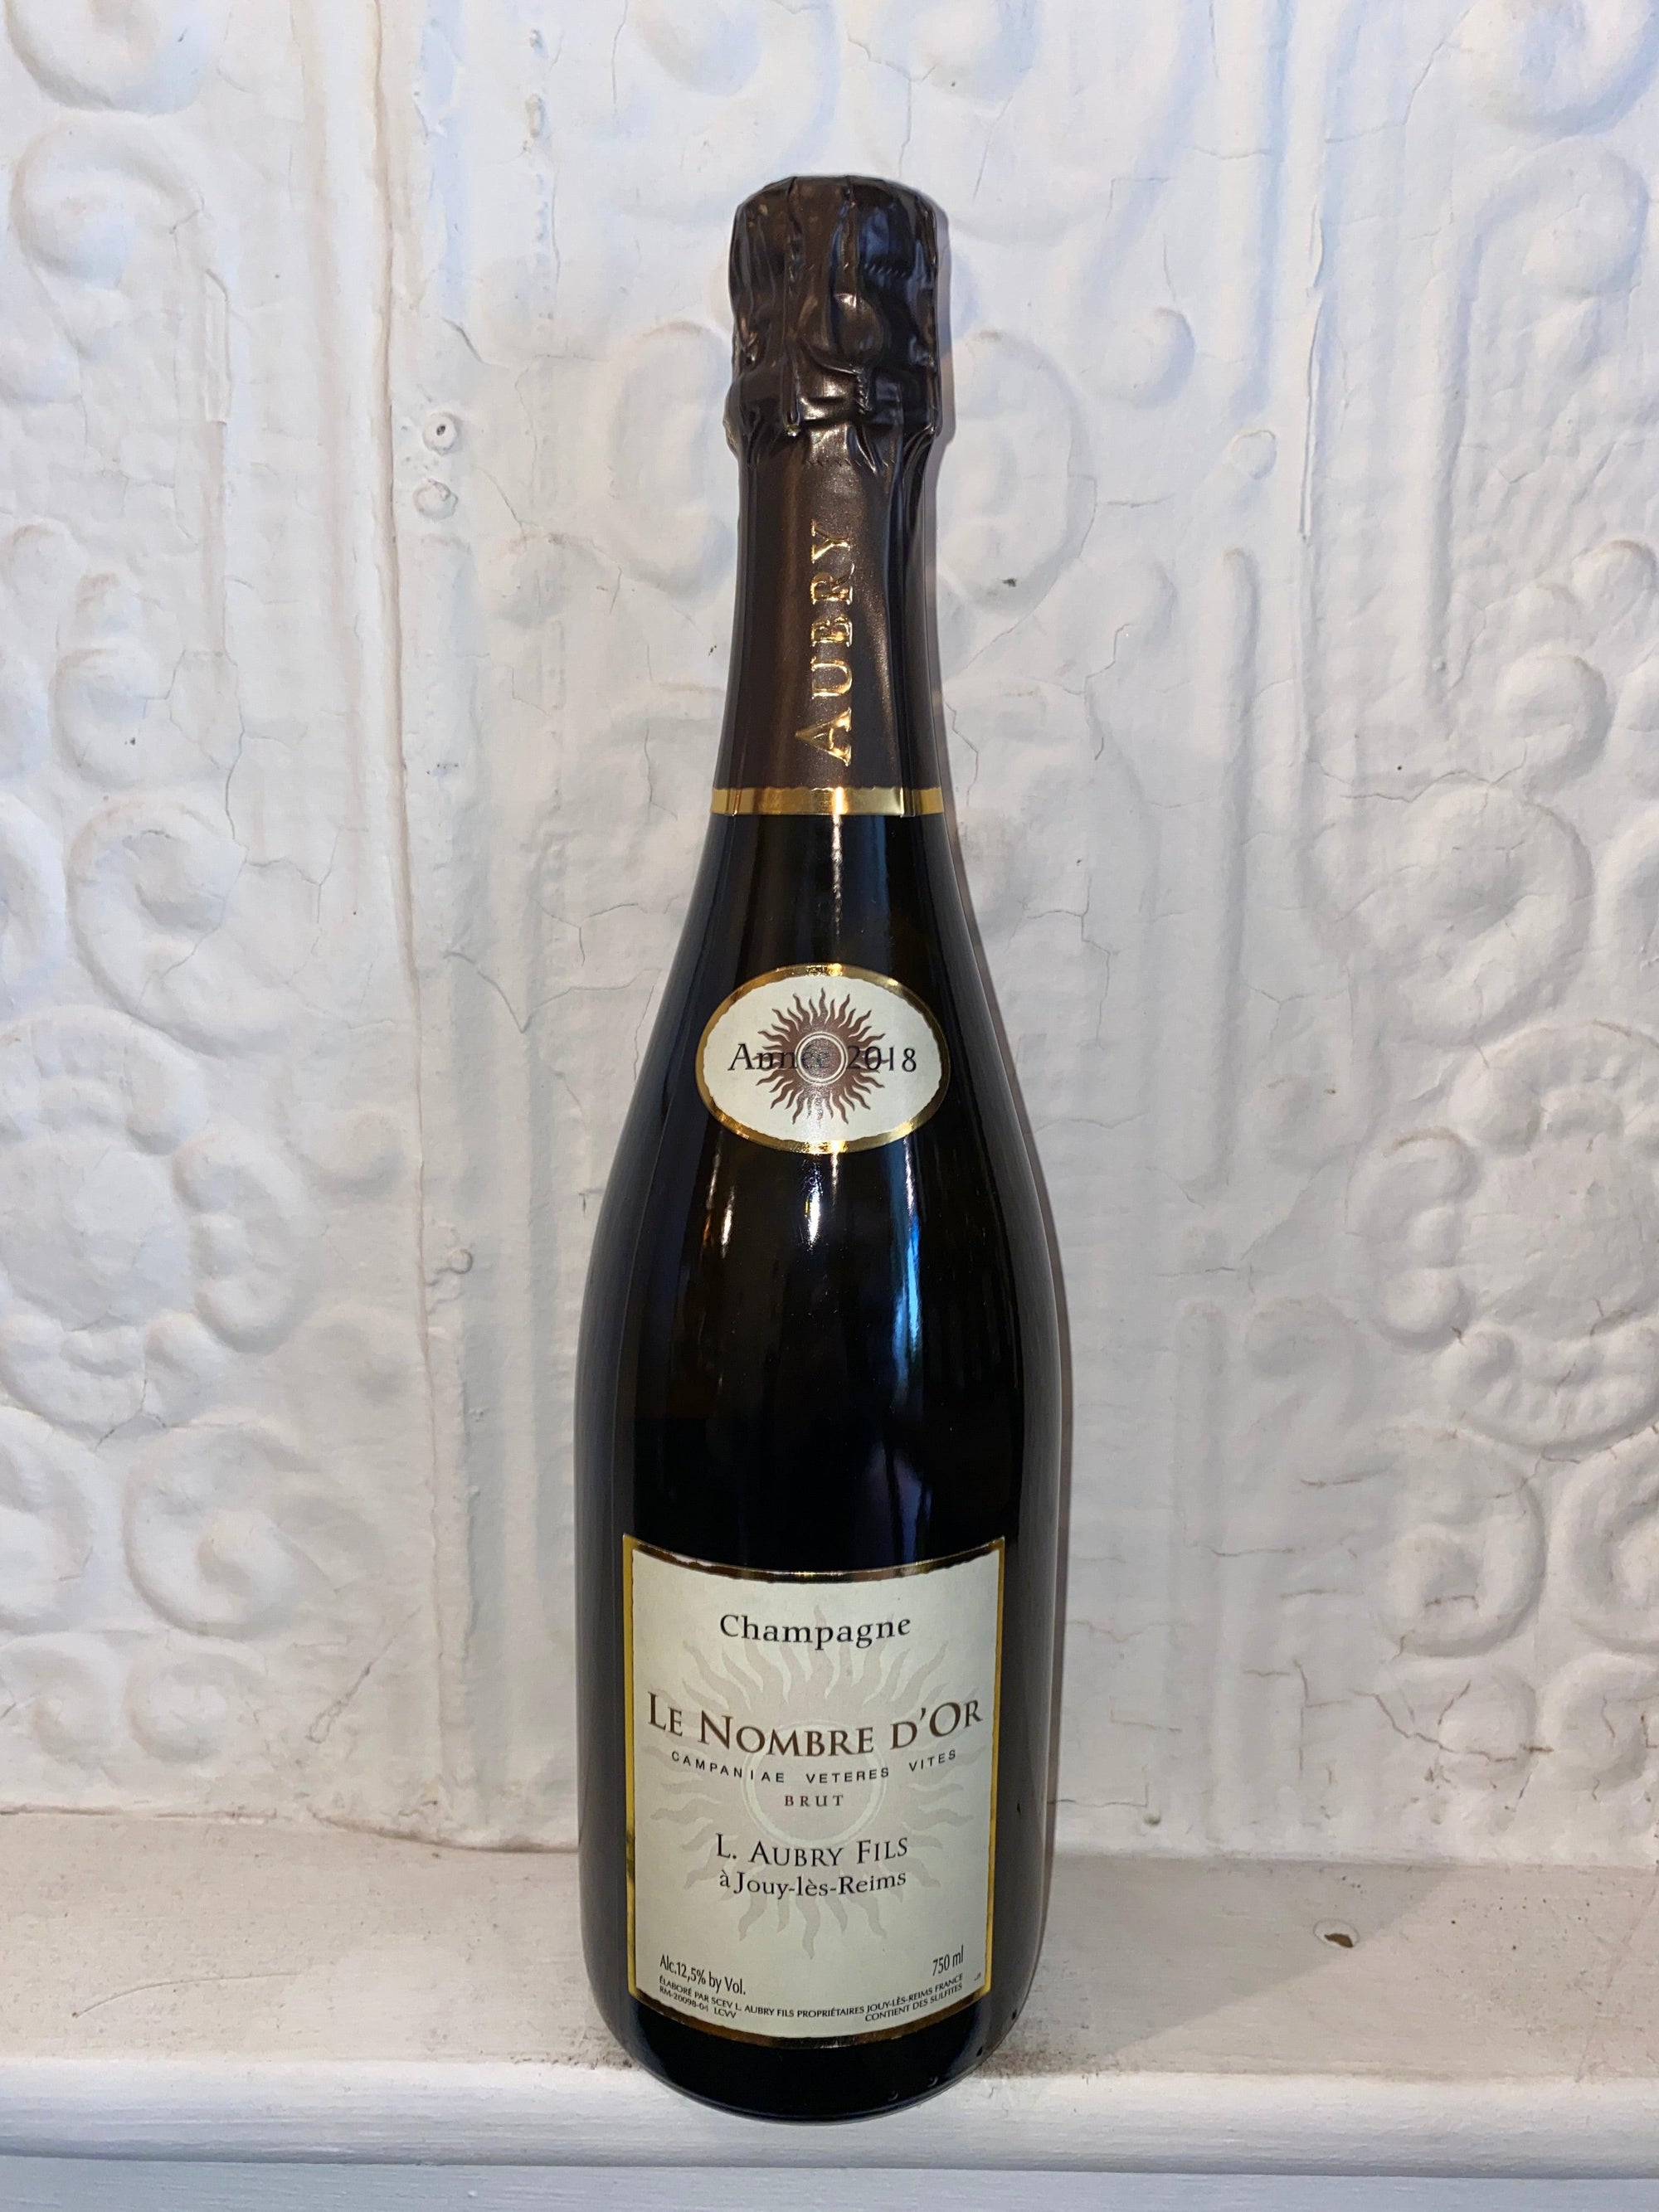 Le Nombre d'Or, L. Aubry Fils 2018 (Champagne, France)-Wine-Bibber & Bell